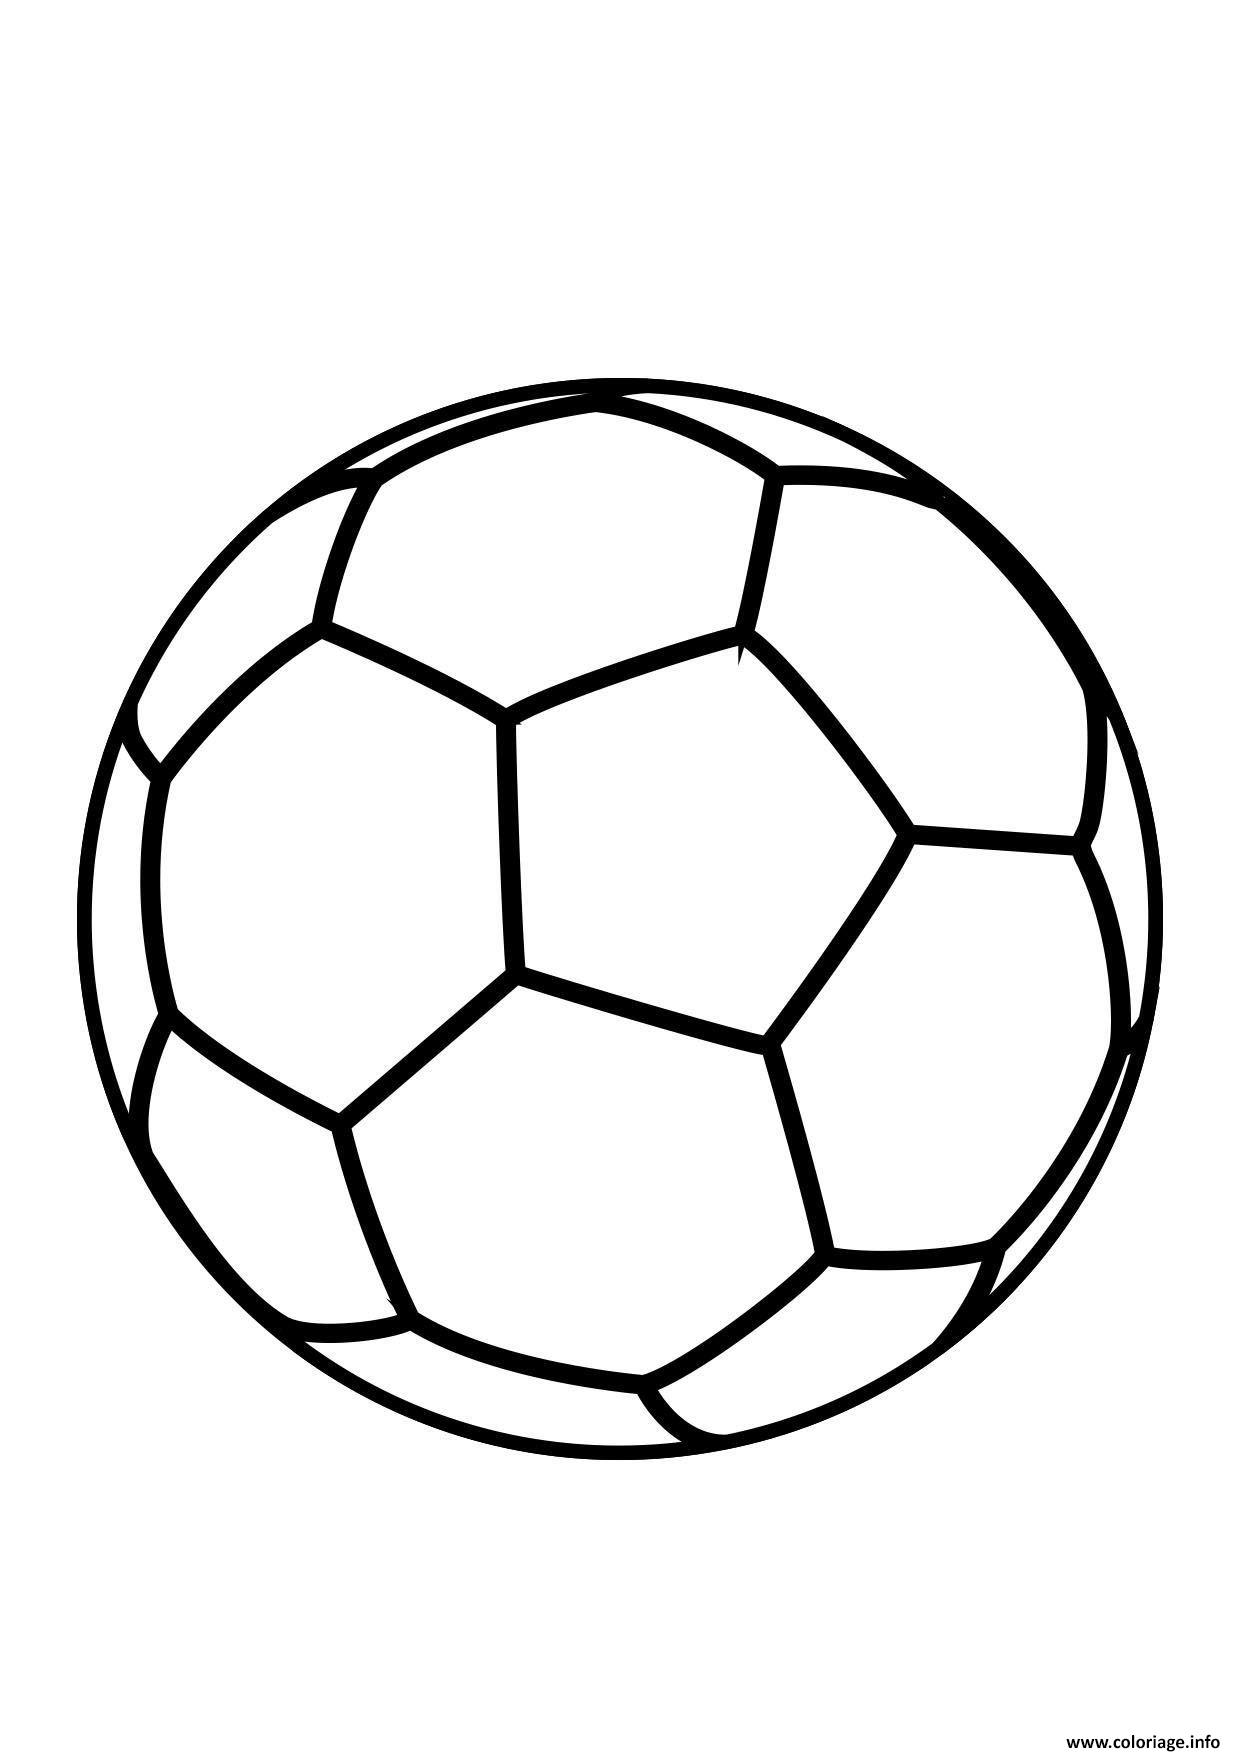 Dessin Gulli Football Ball Sport Coloriage Gratuit à Imprimer